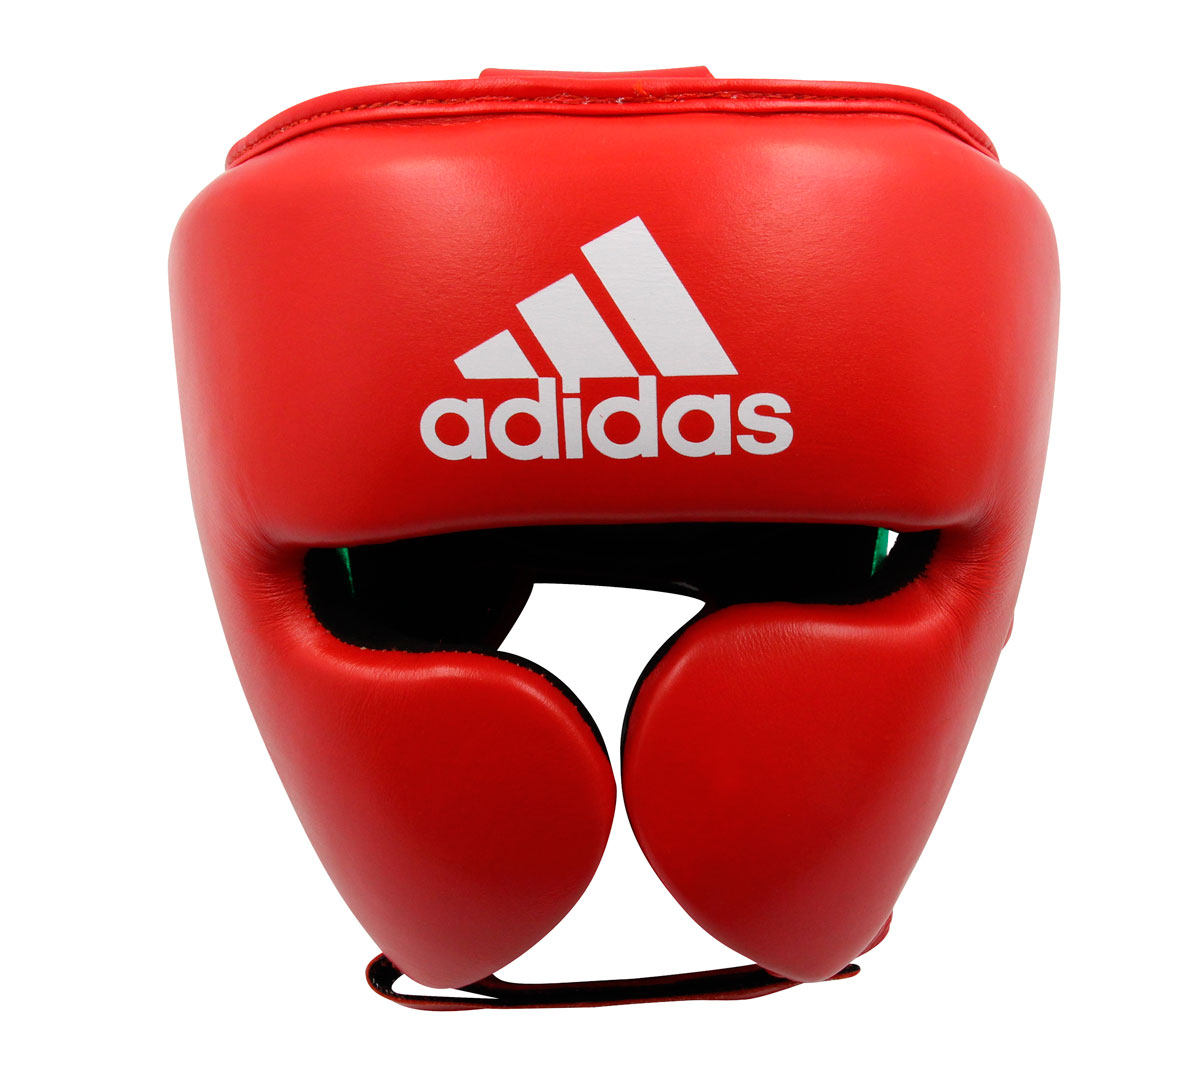 Шлем боксерский AdiStar Pro Headgear красно-зеленый